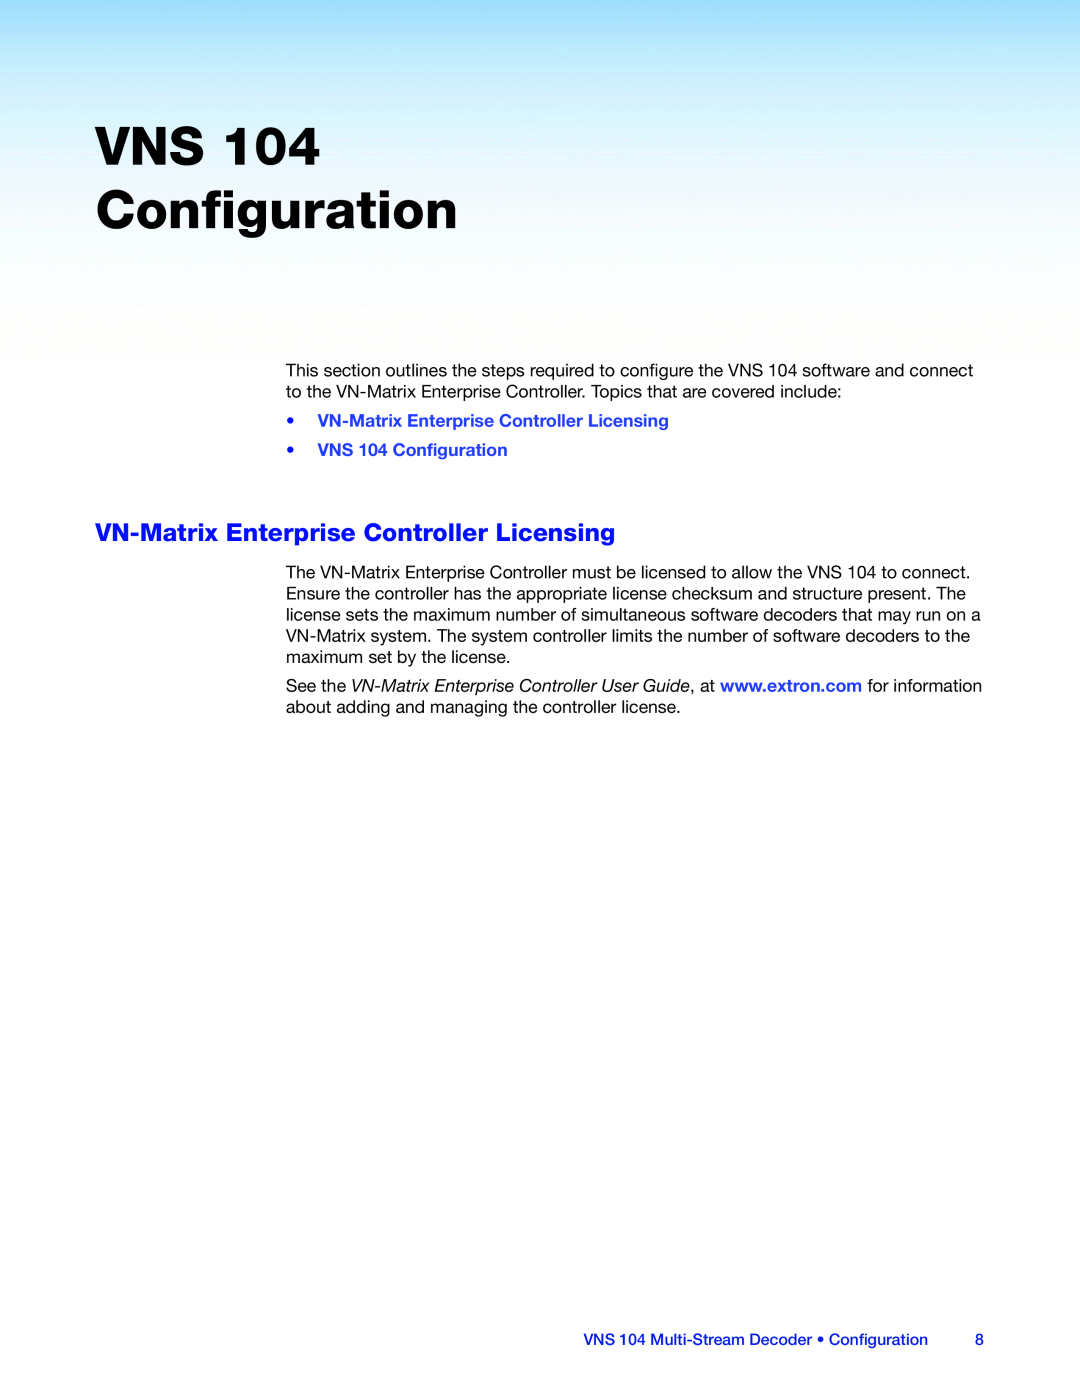 Extron electronic manual VNS Configuration, VN‑Matrix Enterprise Controller Licensing, VNS 104 Configuration 